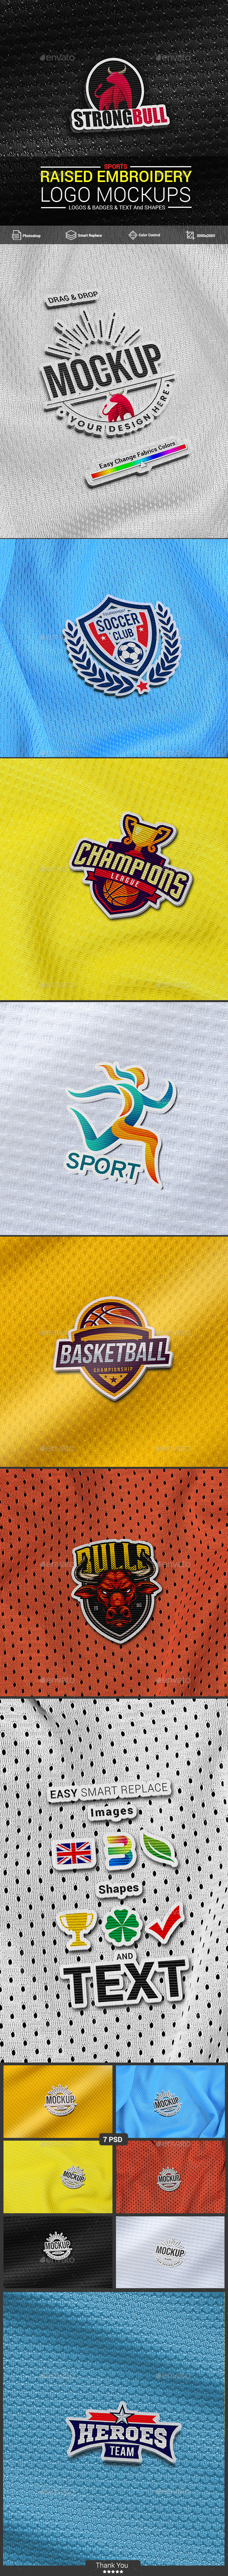 Raised Embroidery Logo Mockups - Sports